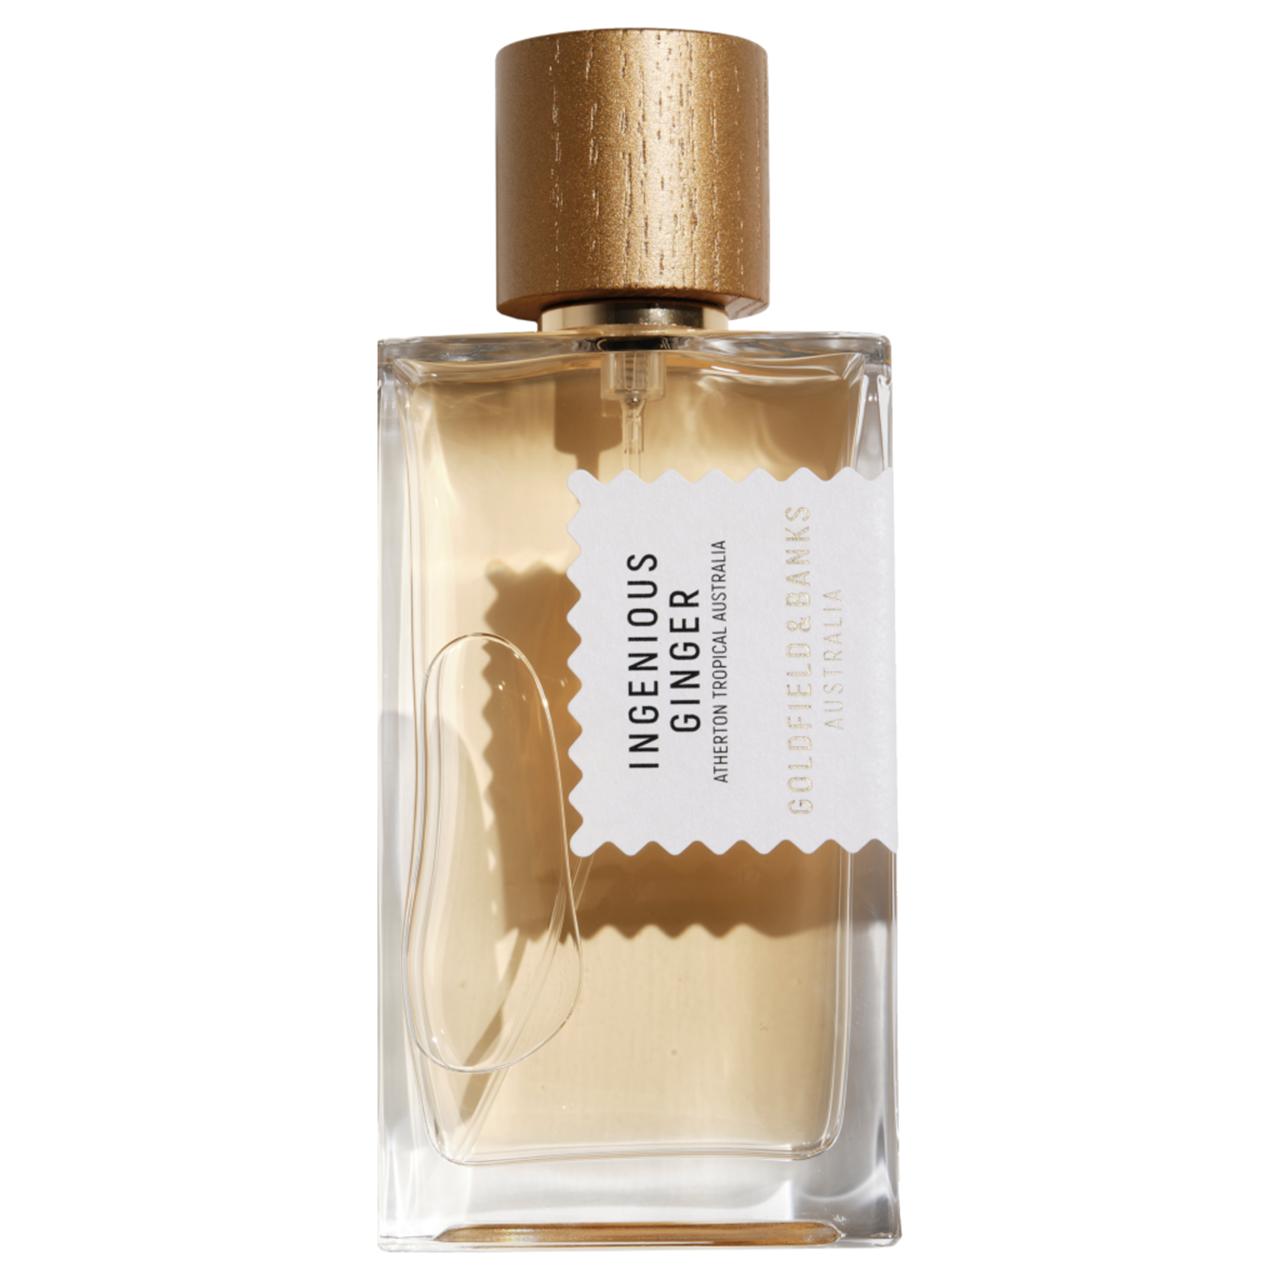 Goldfield & Banks, perfume